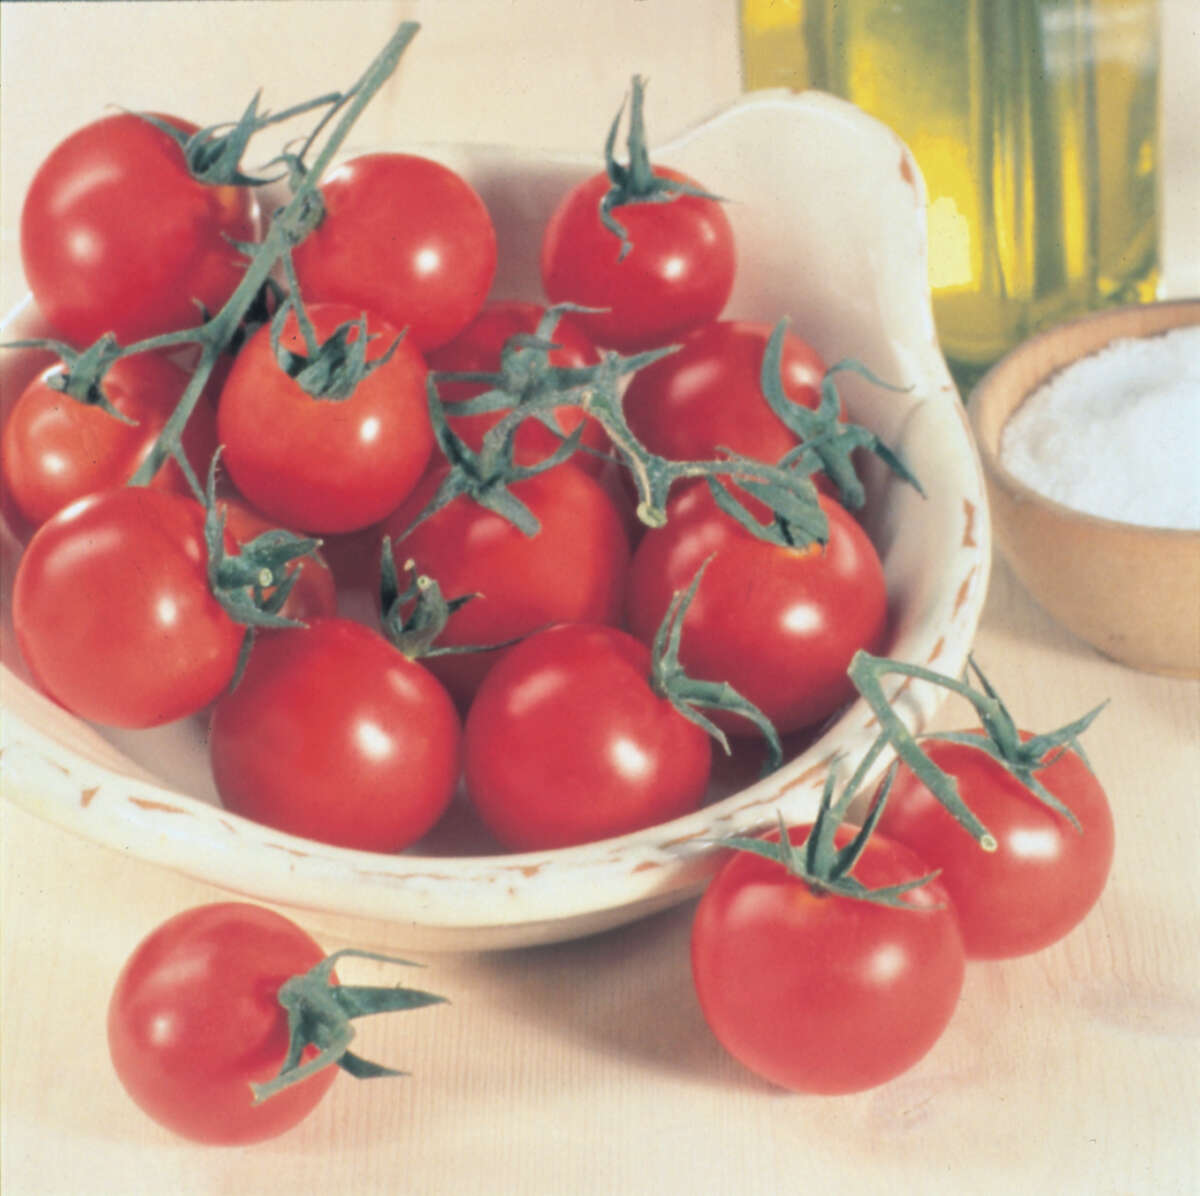 NatureSweet Tomatoes